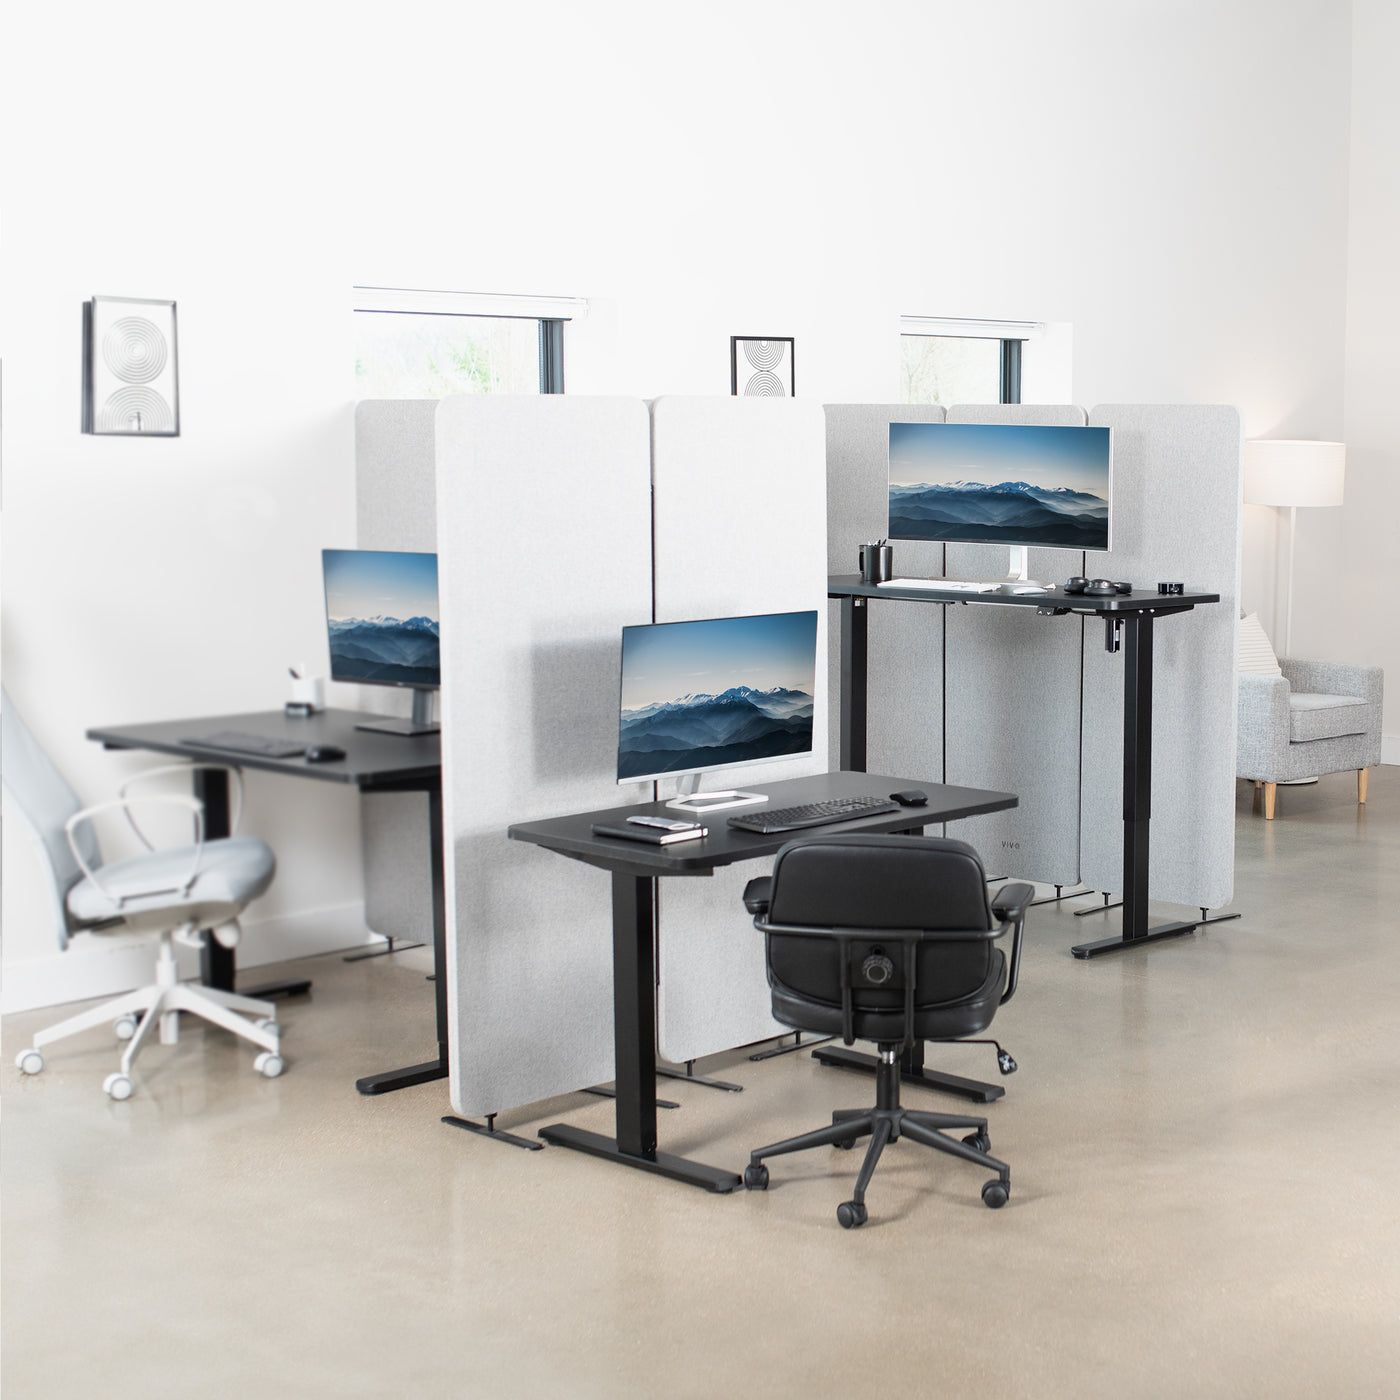 Ergonomic electric height adjustable desktop workstation for active sit or stand efficient workspace.